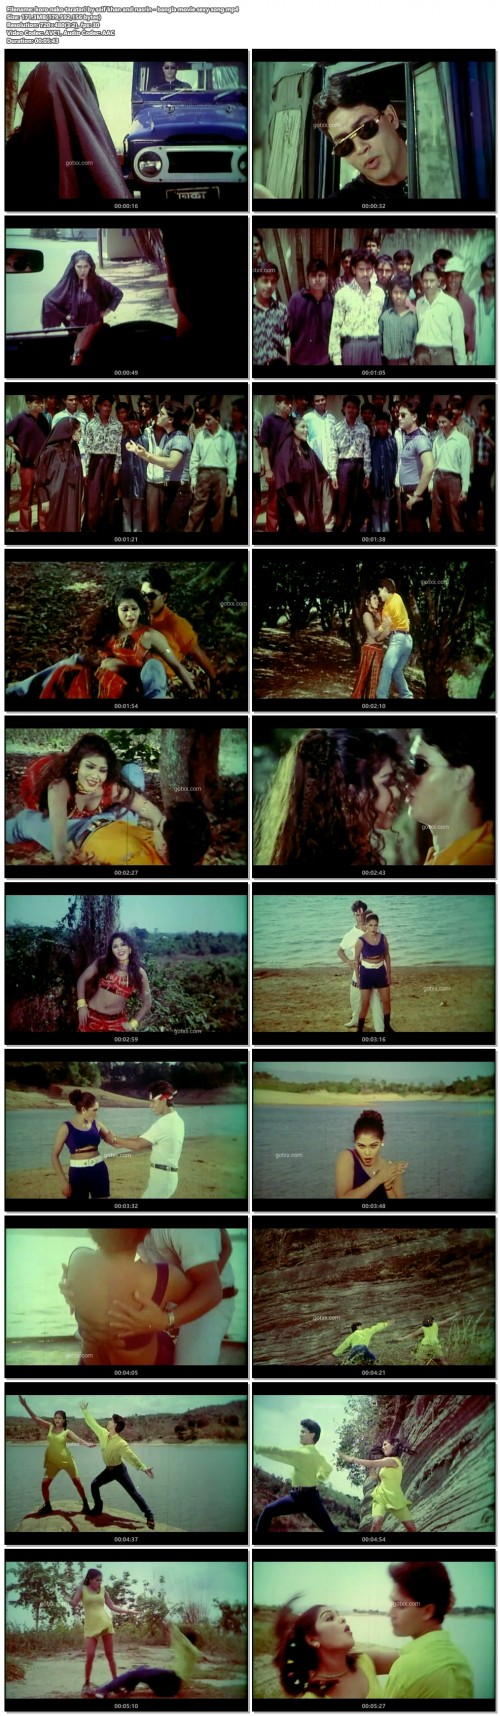 koro nako taratari by saif khan and nasrin bangla movie sexy song.mp4